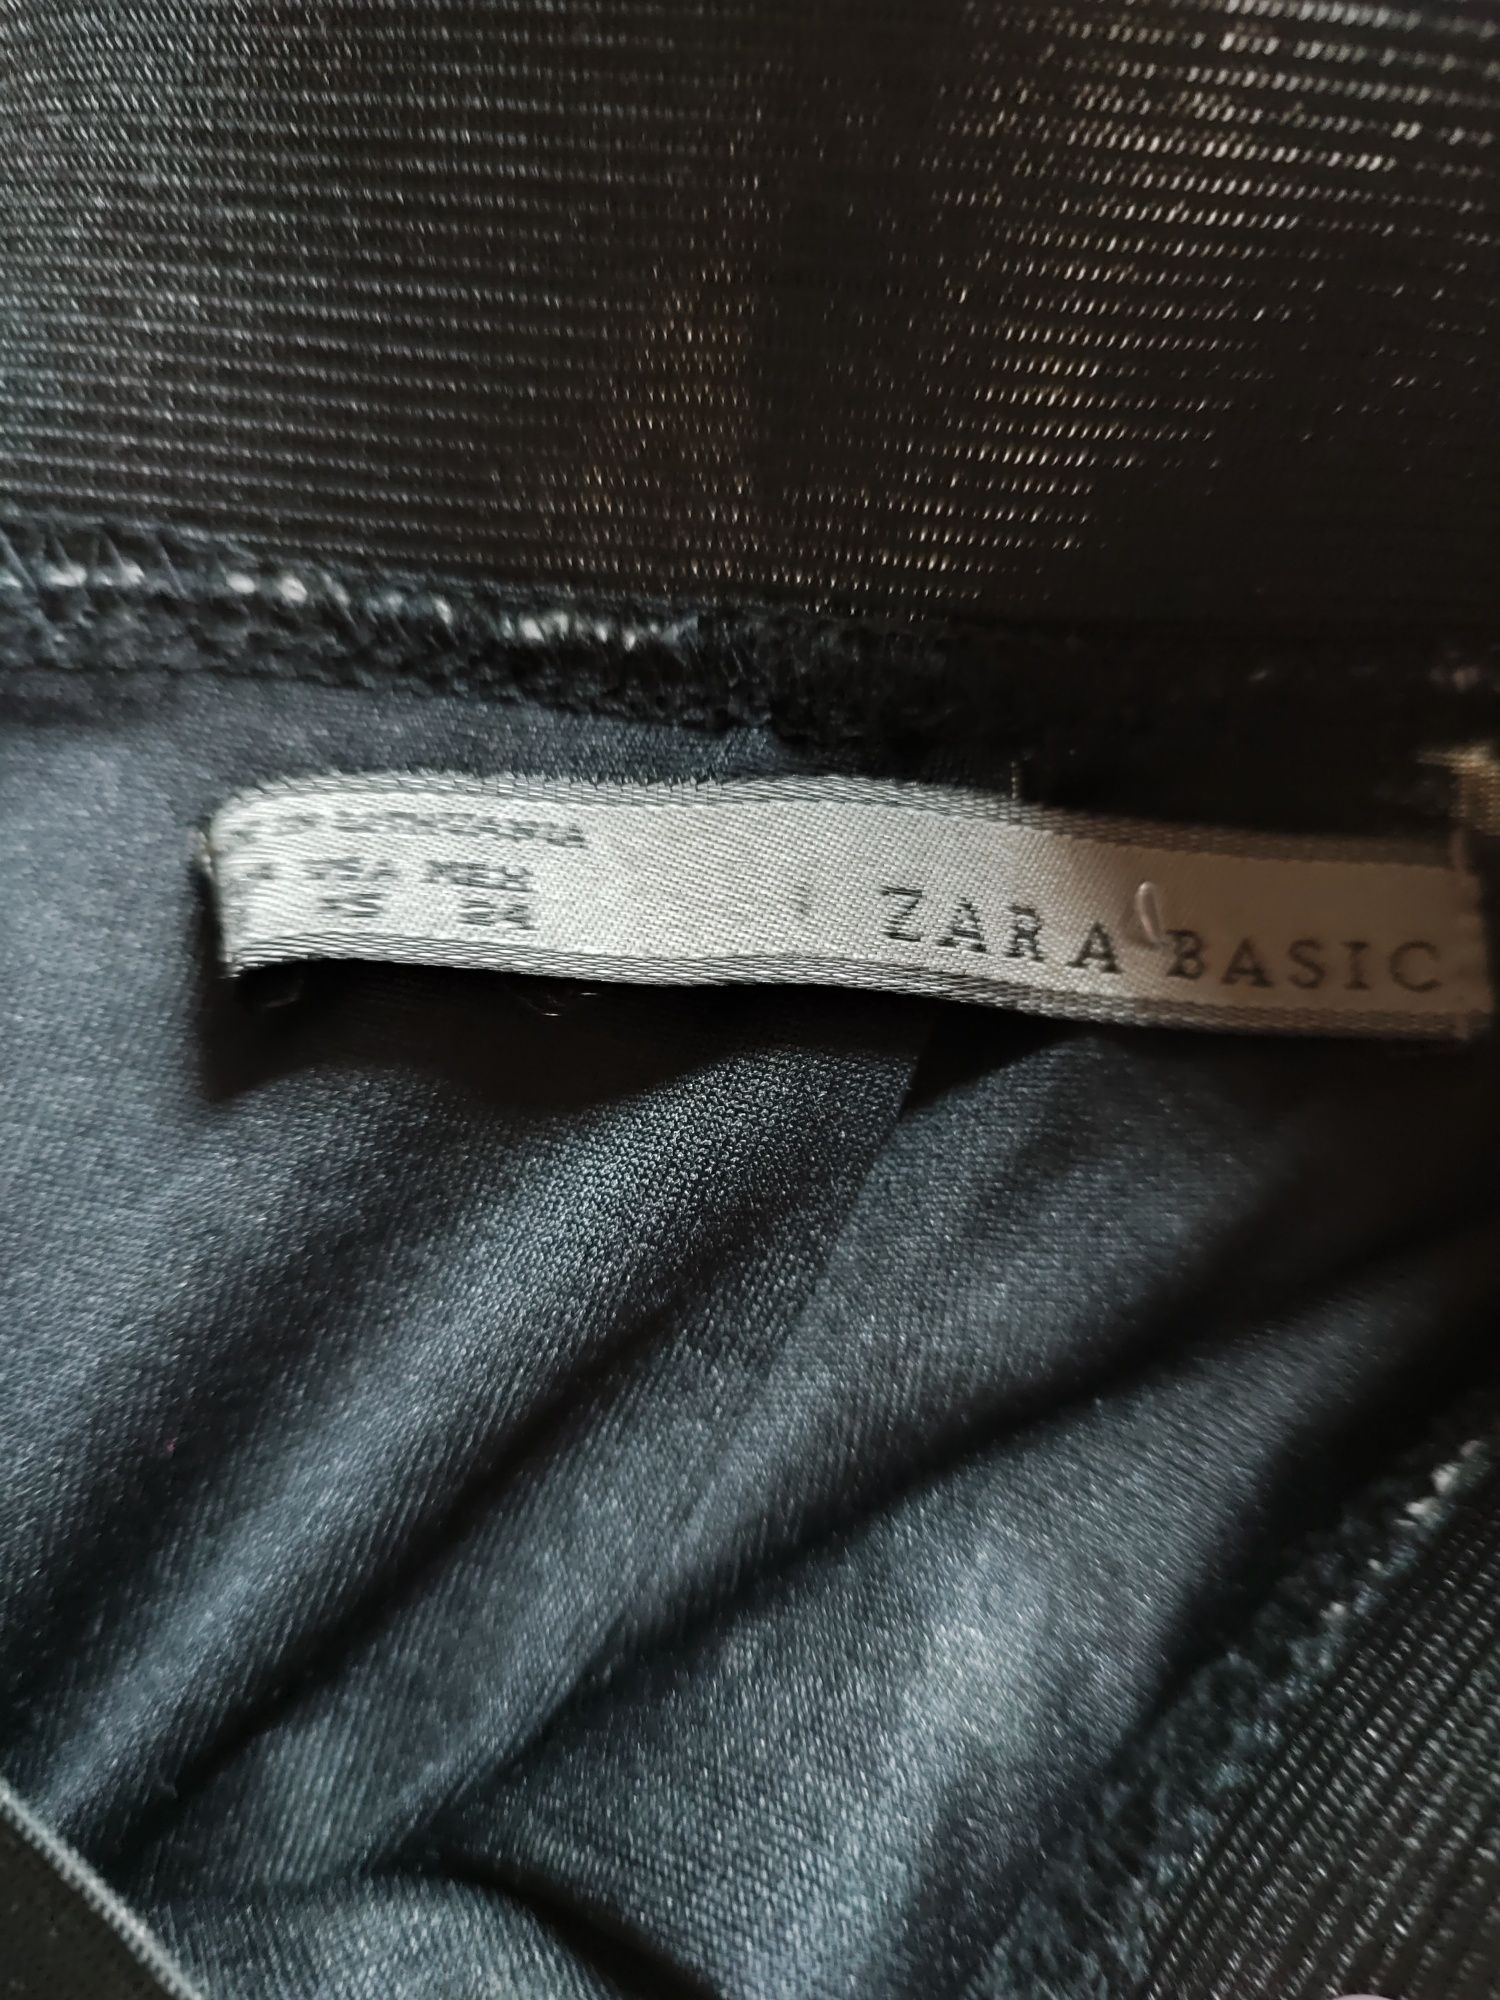 Fusta Zara, mărime XS (merge și S). Imprimeu ziar